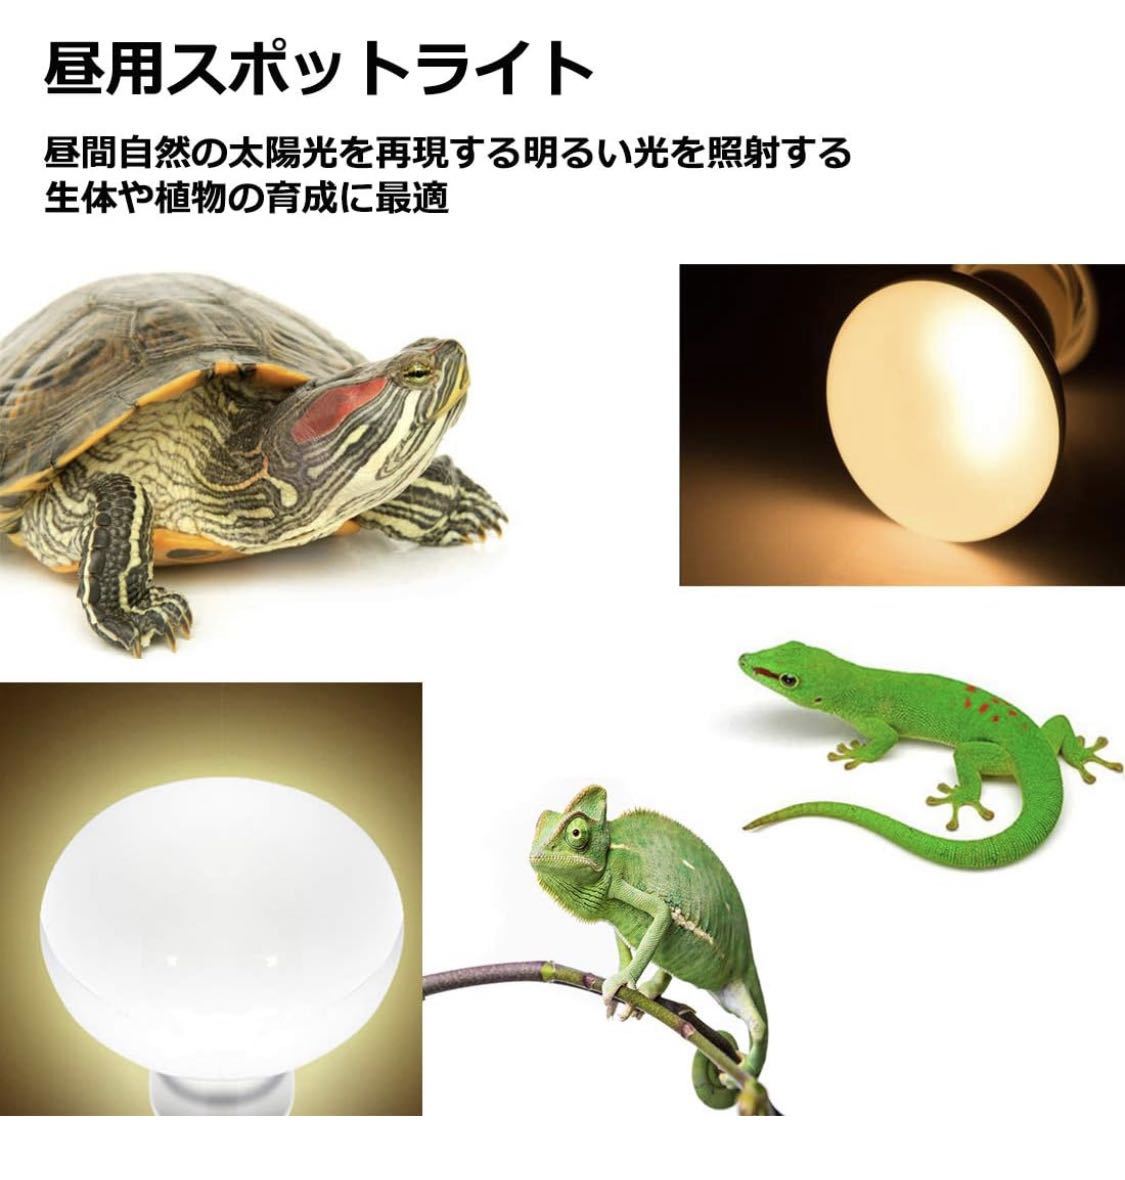 ShiawaseforU reptiles light UVA daytime for spot lamp 80w